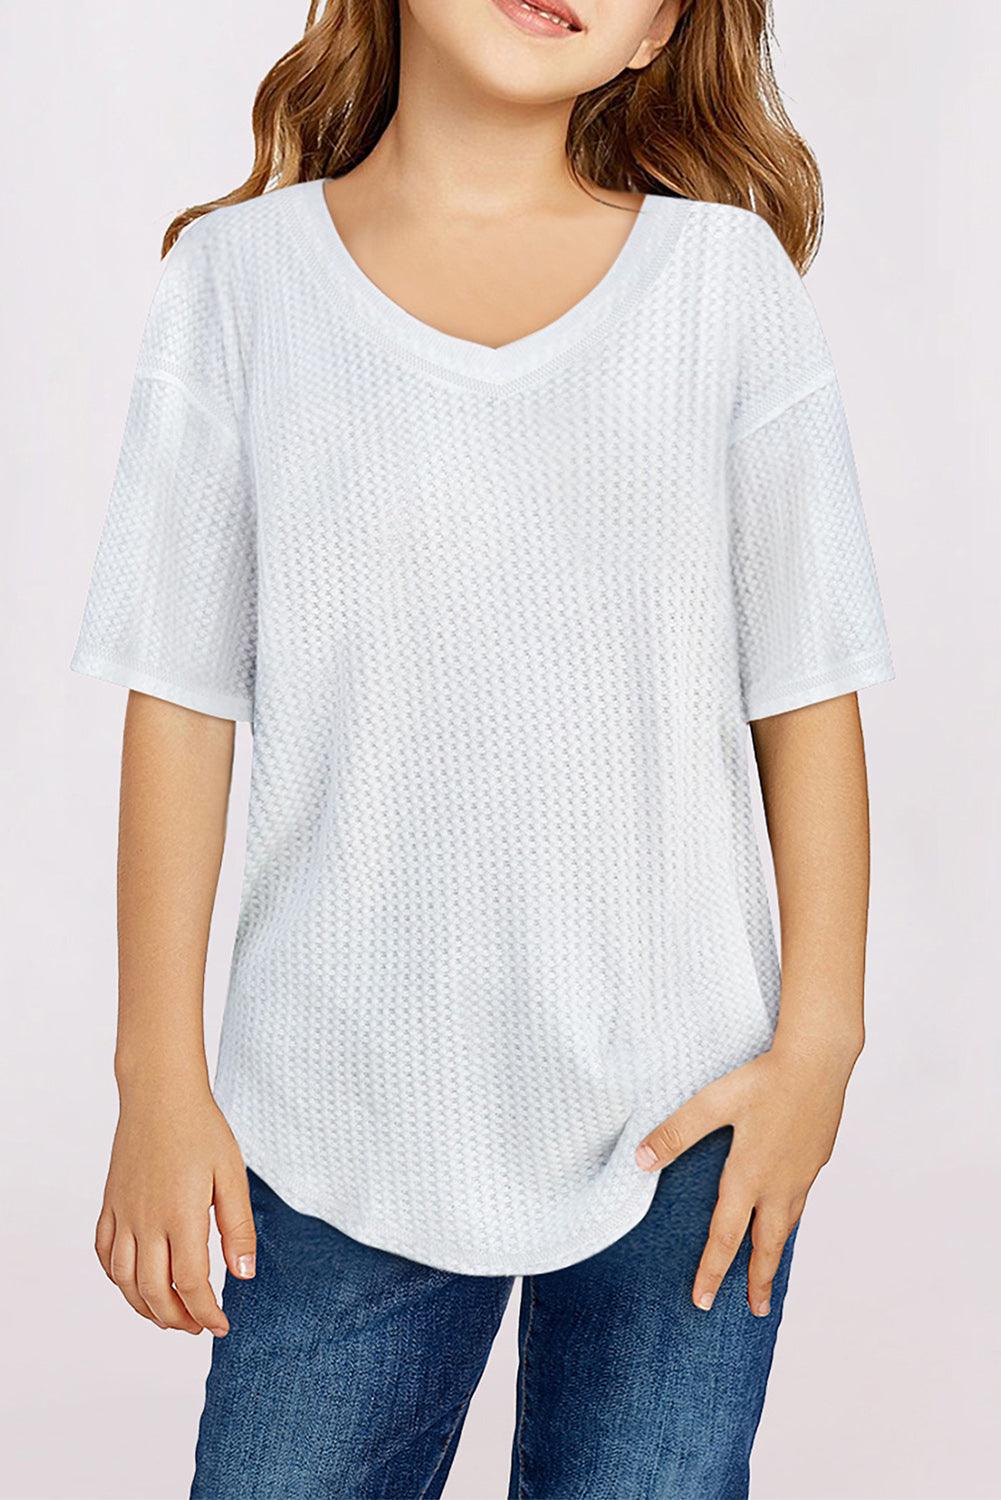 Textured V Neck Short Sleeve Girl's T Shirt - L & M Kee, LLC